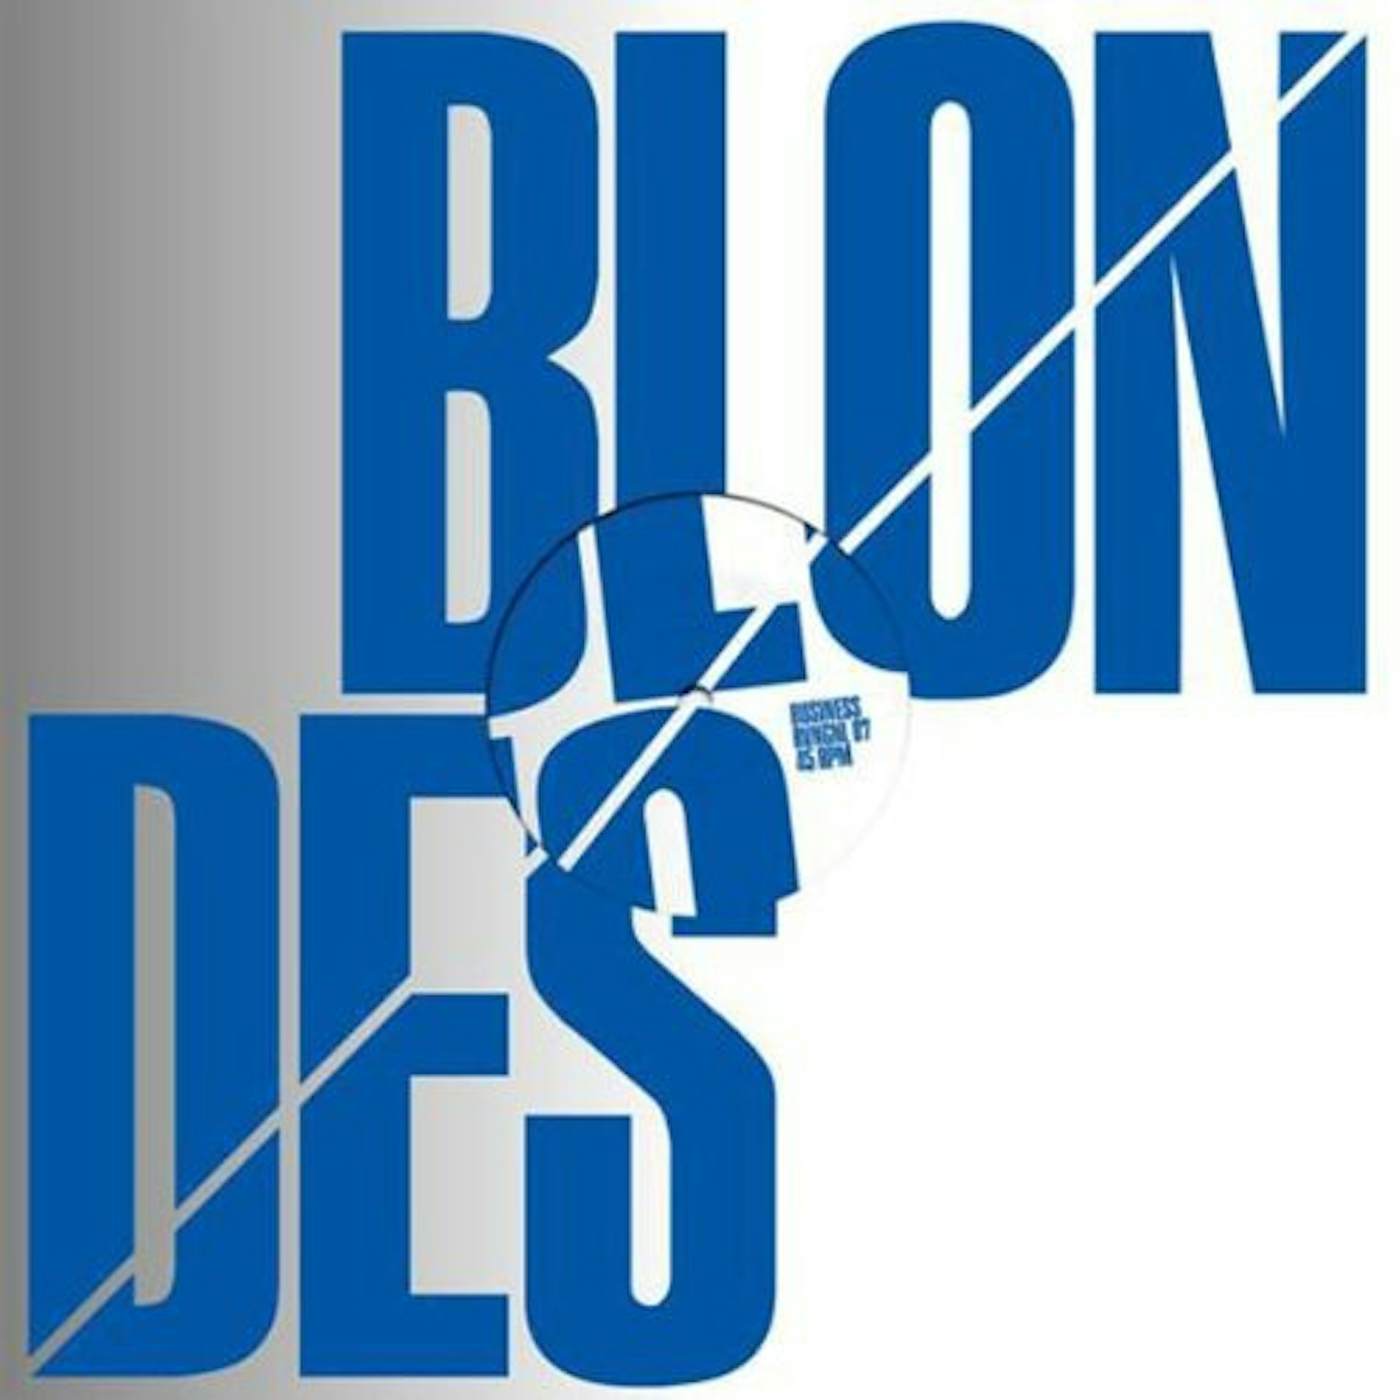 Blondes BUSINESS/PLEASURE Vinyl Record